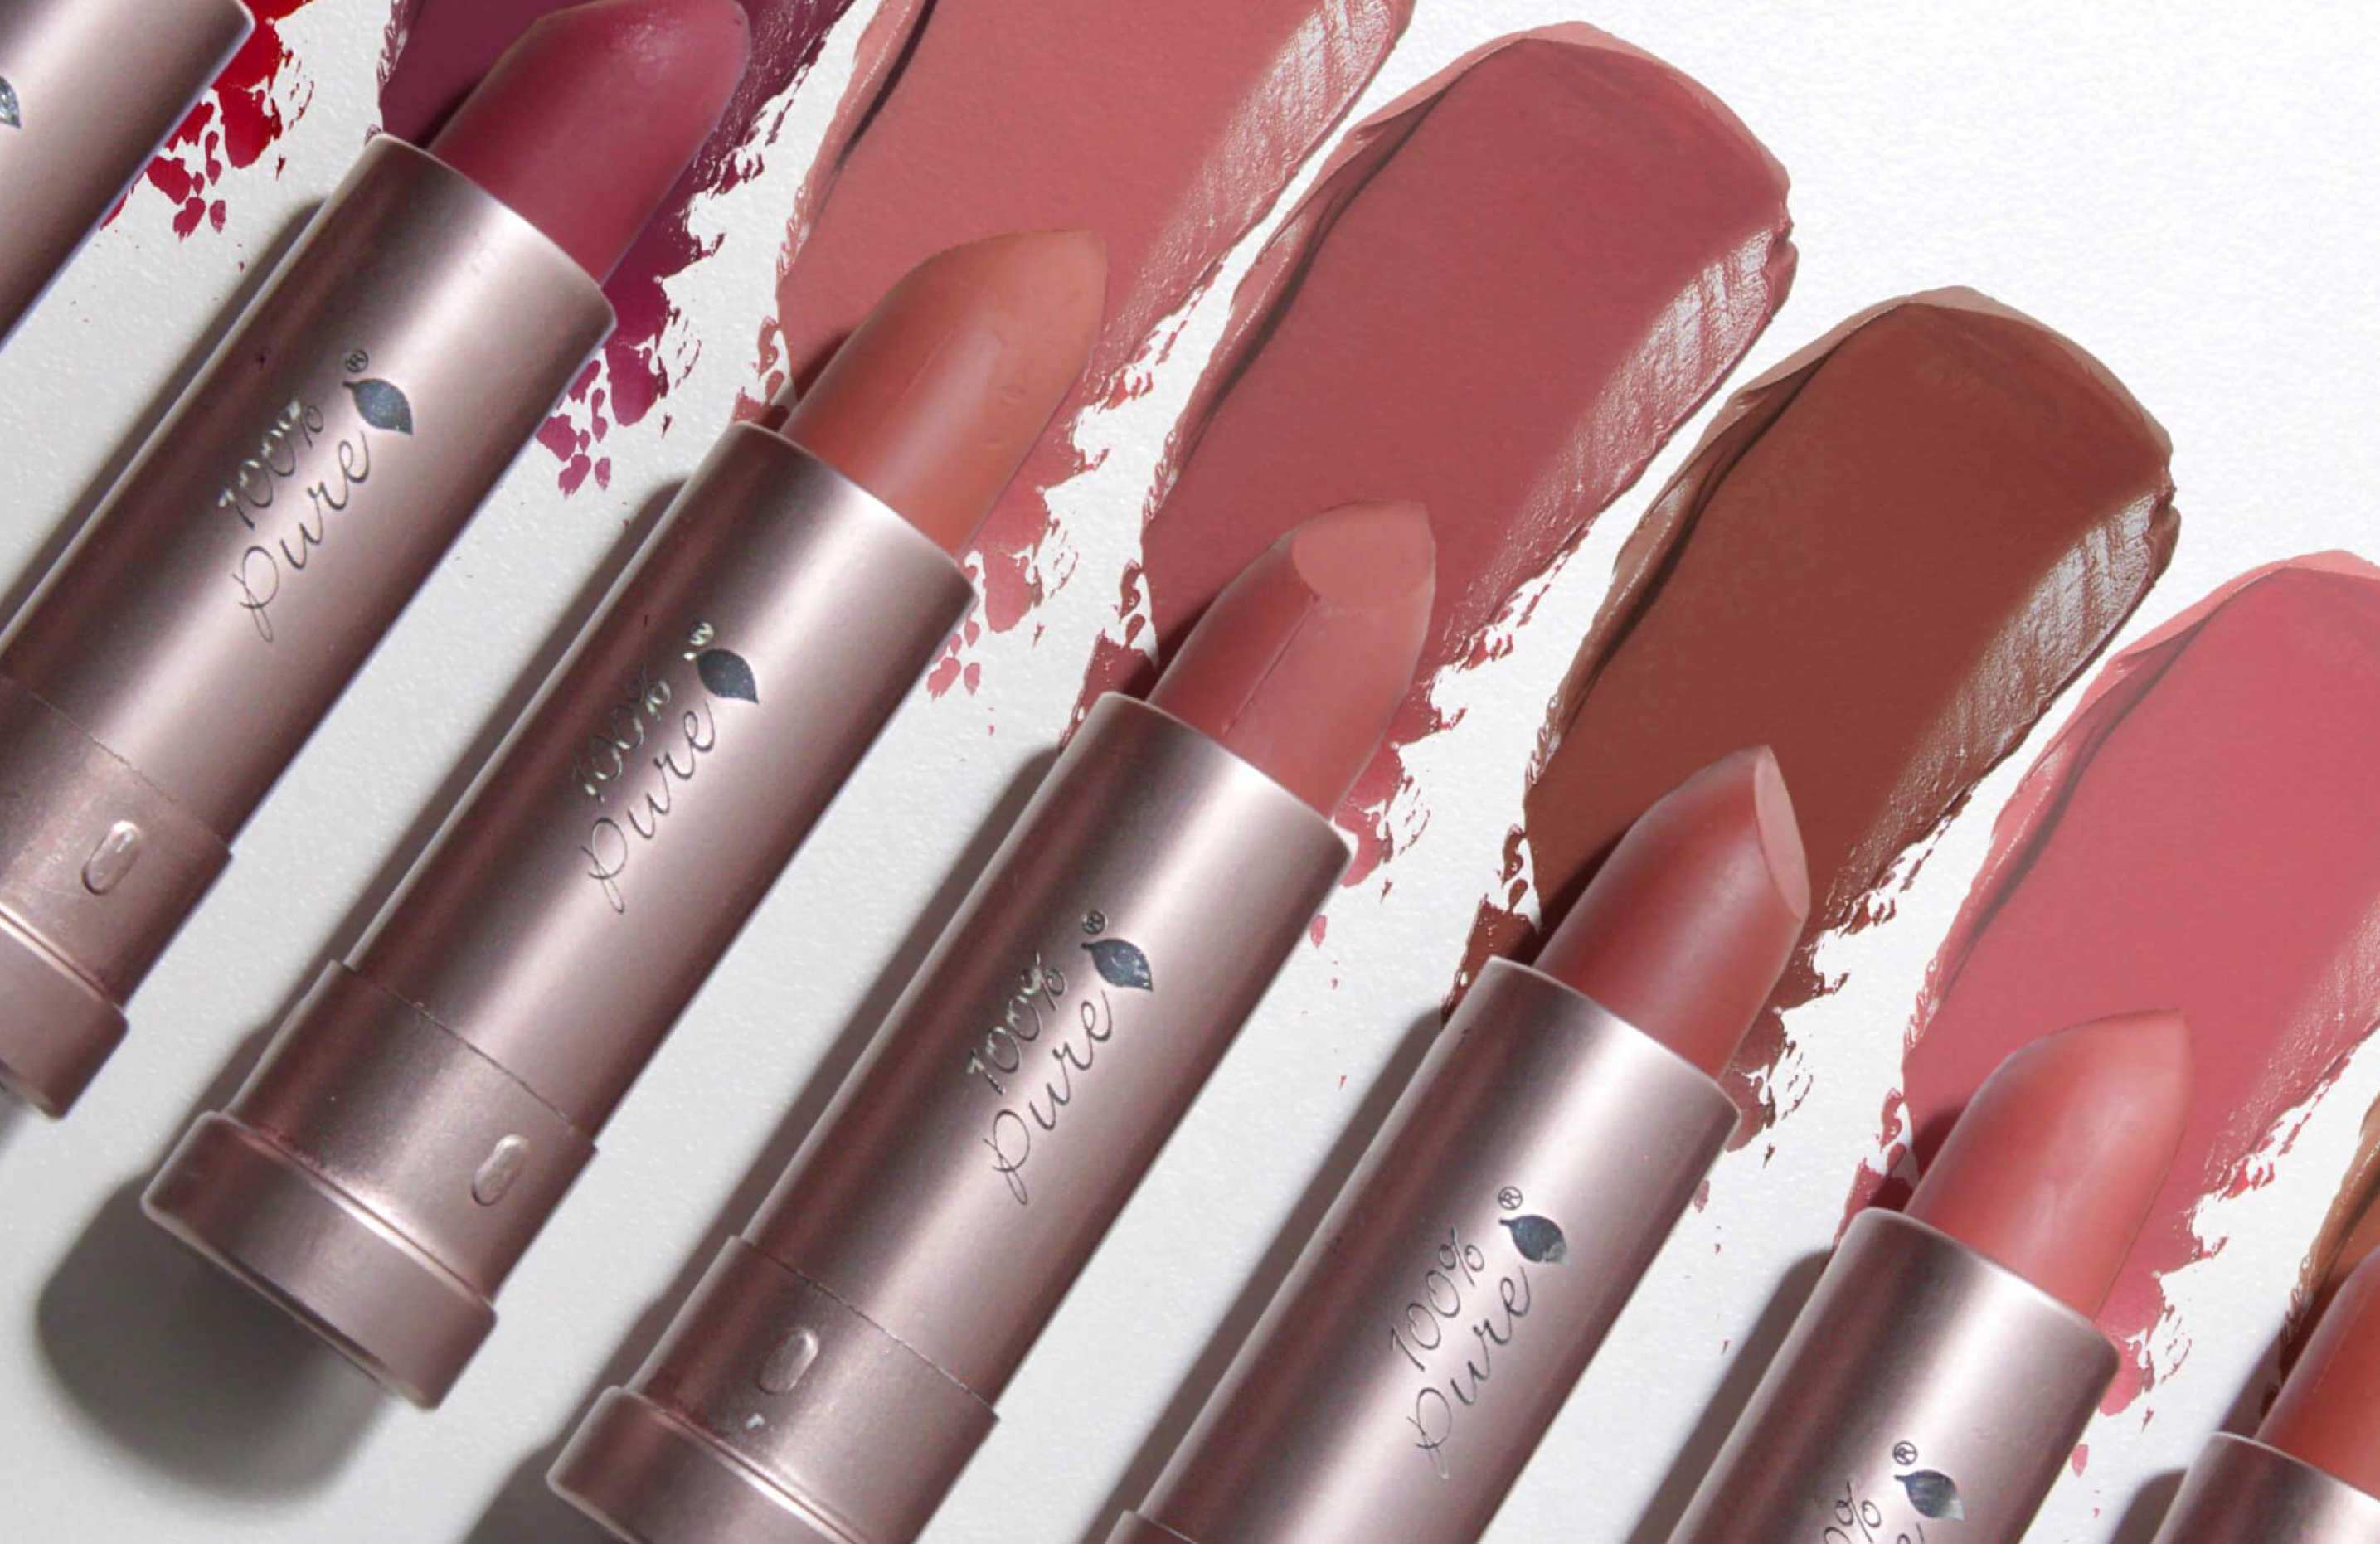 A lineup of 100% Pure lipsticks.